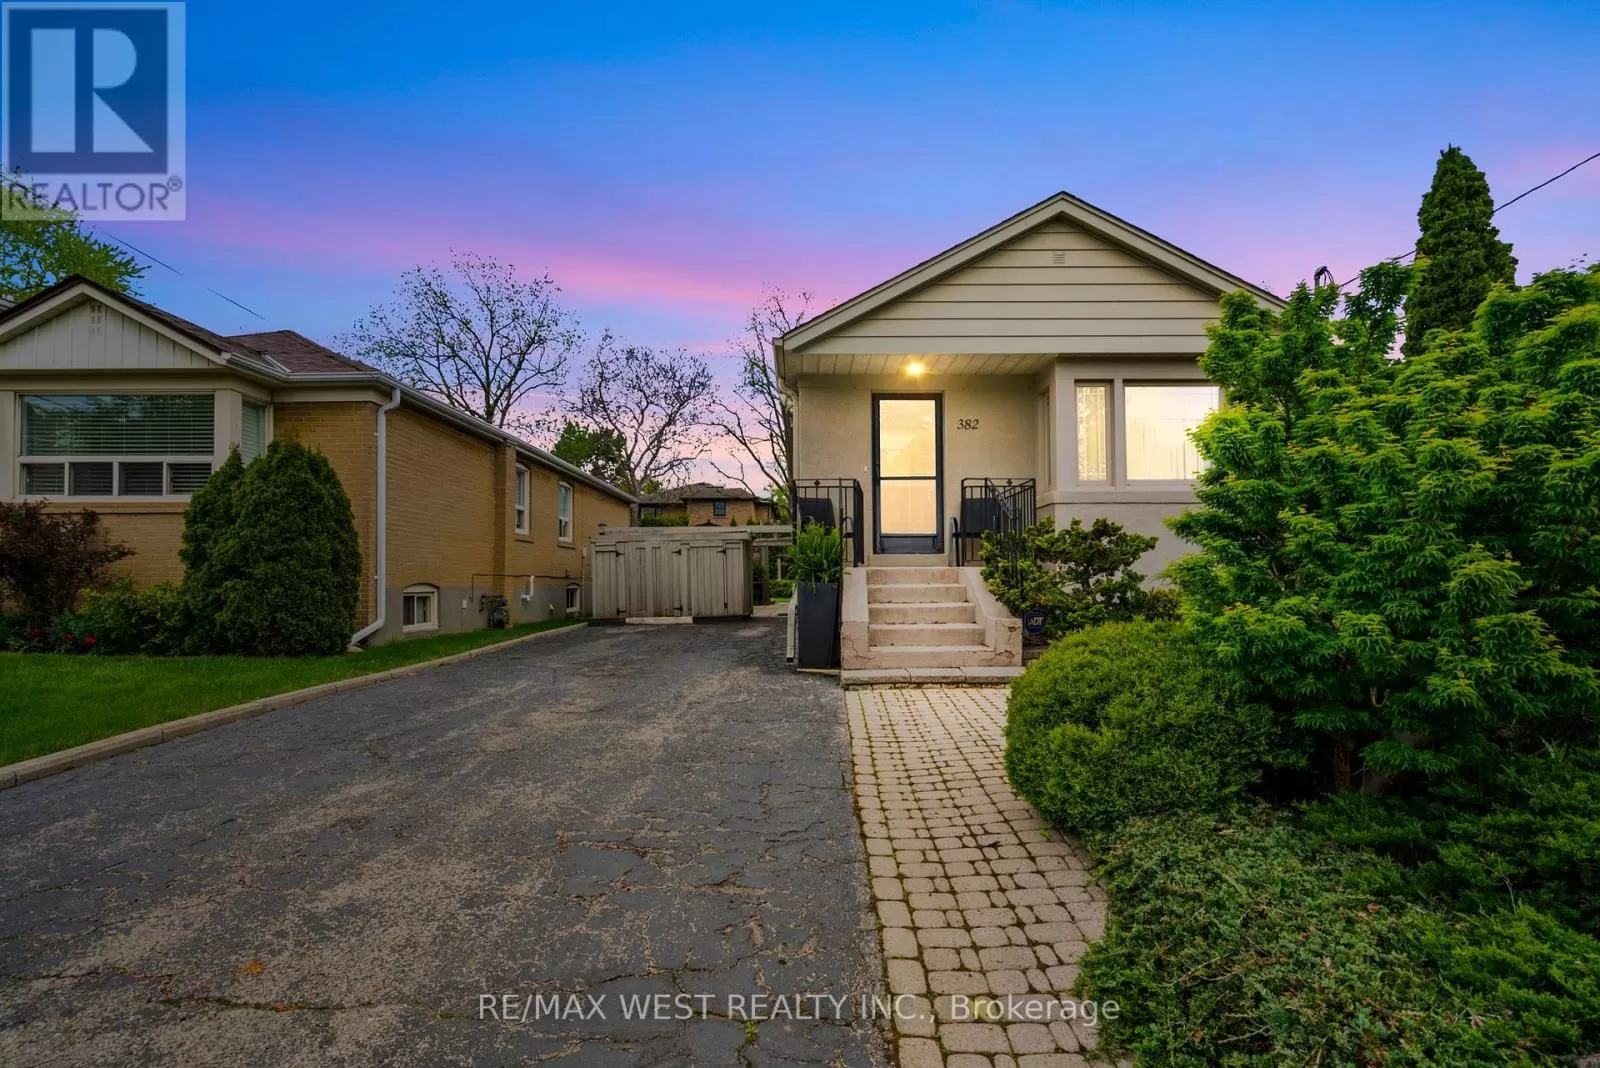 House for rent: 382 Brooke Avenue, Toronto, Ontario M5M 2L6